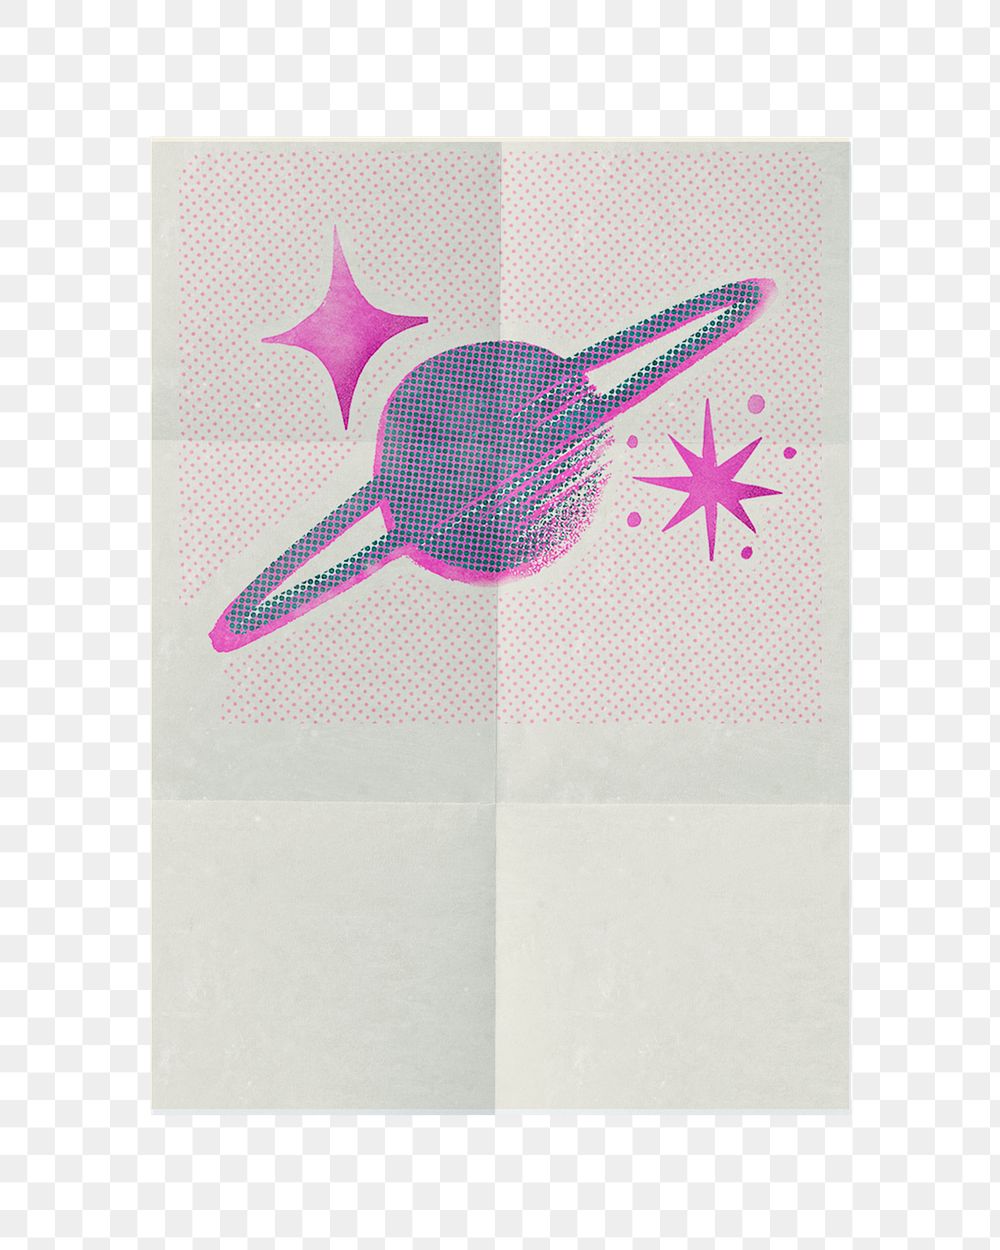 Saturn poster png sticker, transparent background